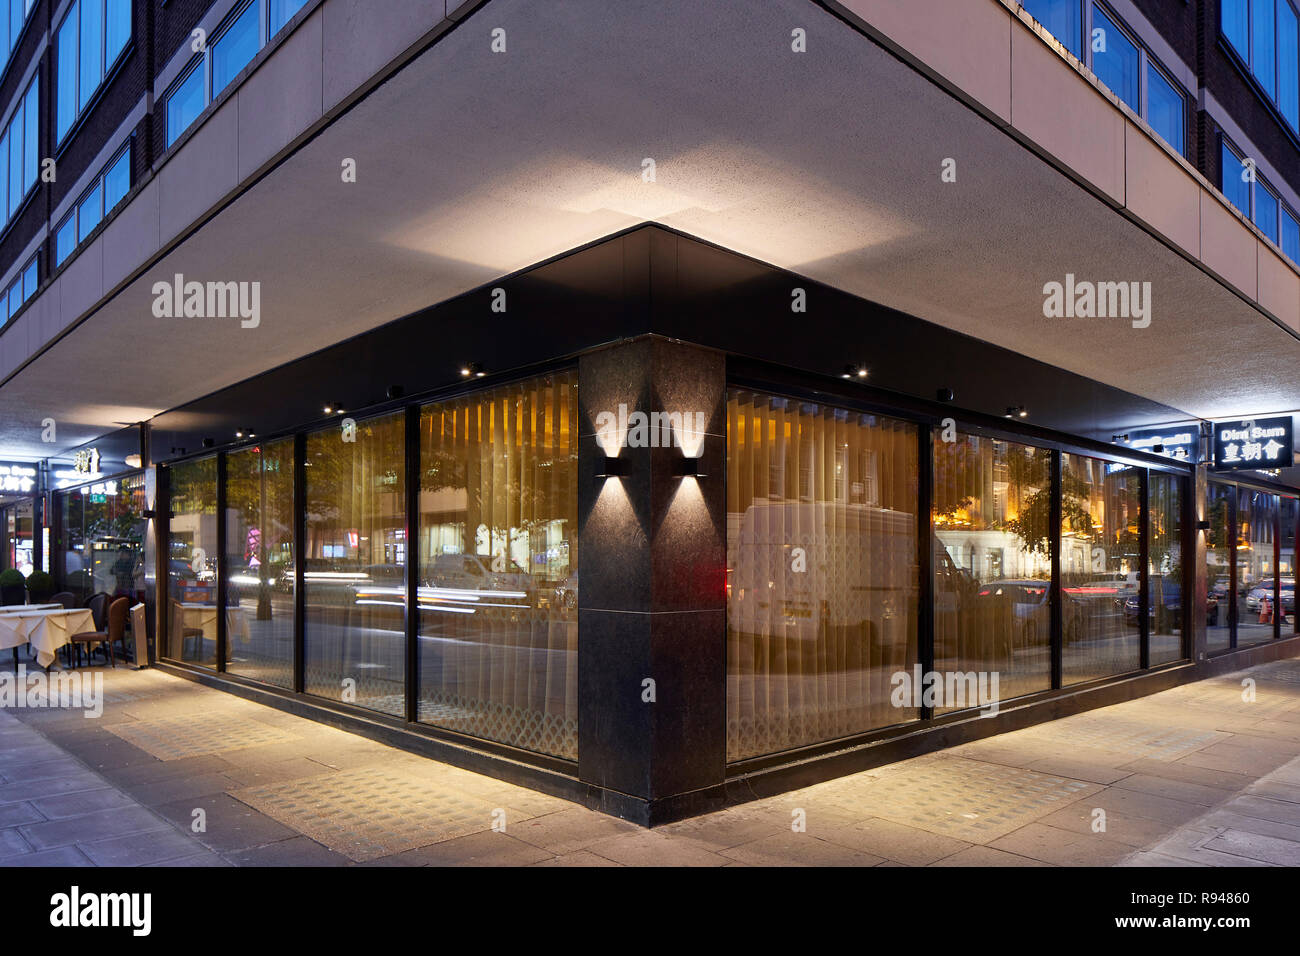 Ecke Elevation. Royal China Club, London, Vereinigtes Königreich. Architekt: Steif+Trevillion Architekten, 2018. Stockfoto